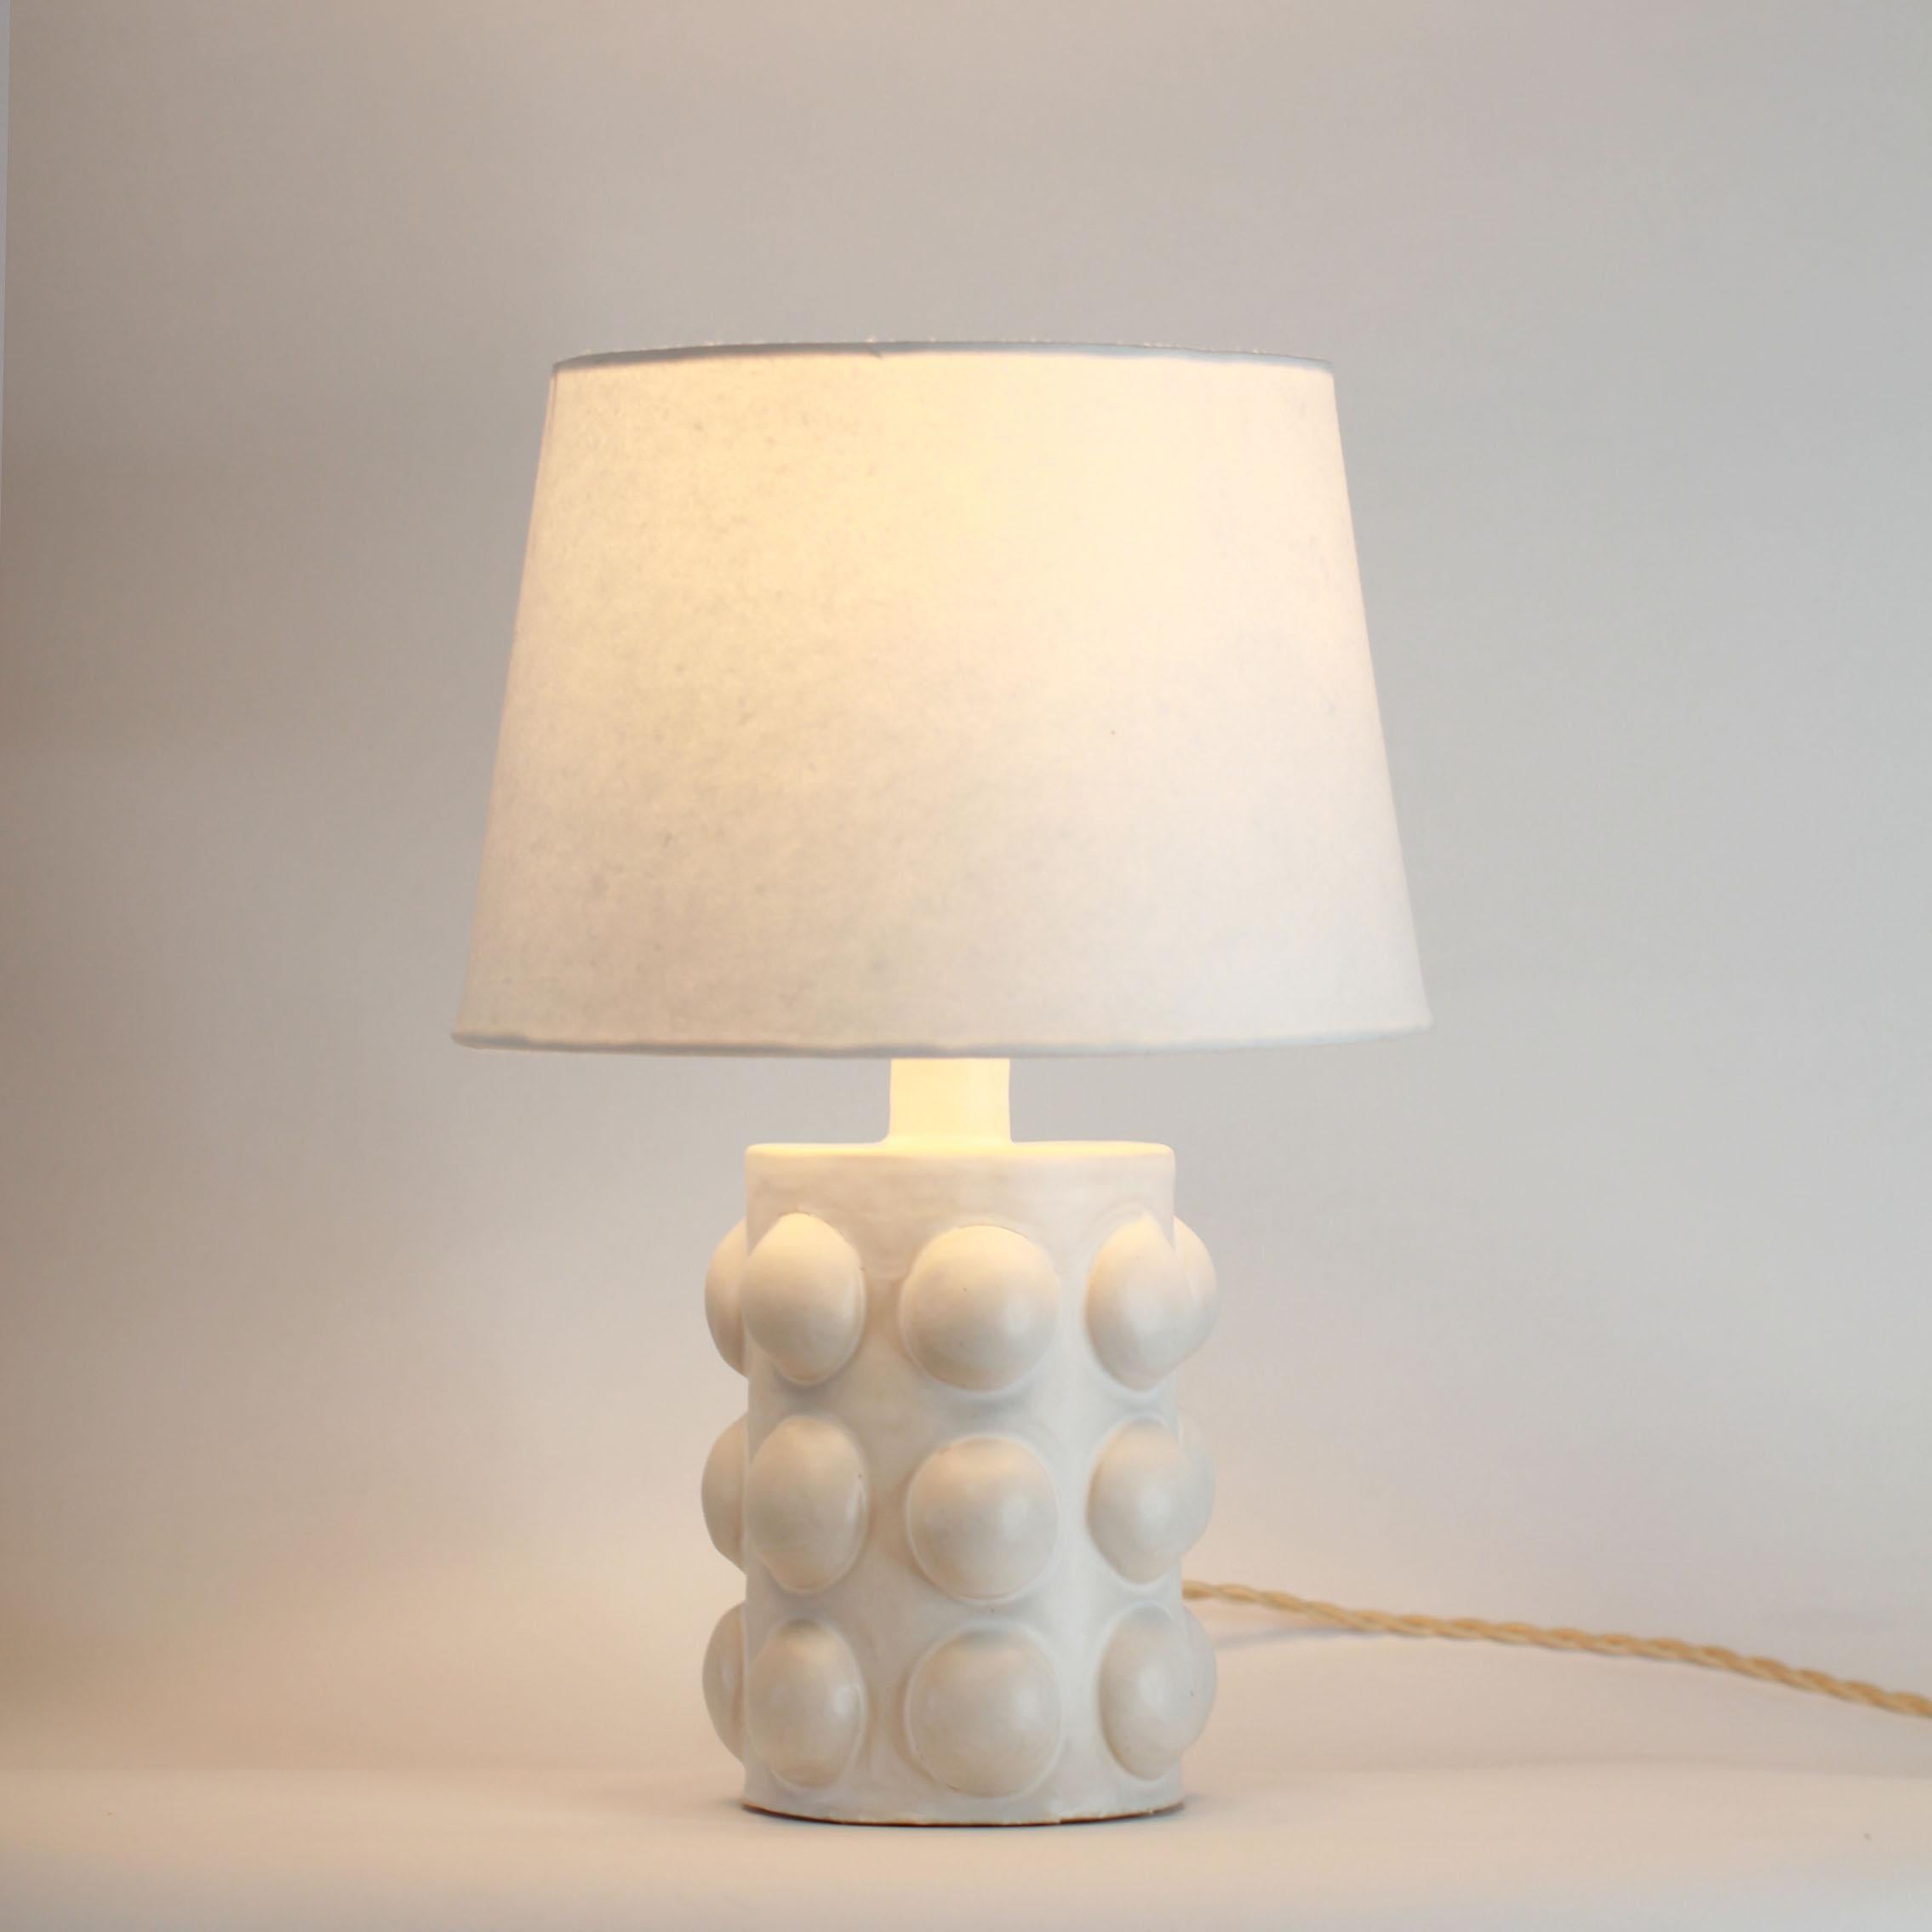 Modern 'Pastille' Satin White Glazed Ceramic Table Lamp by Design Frères For Sale